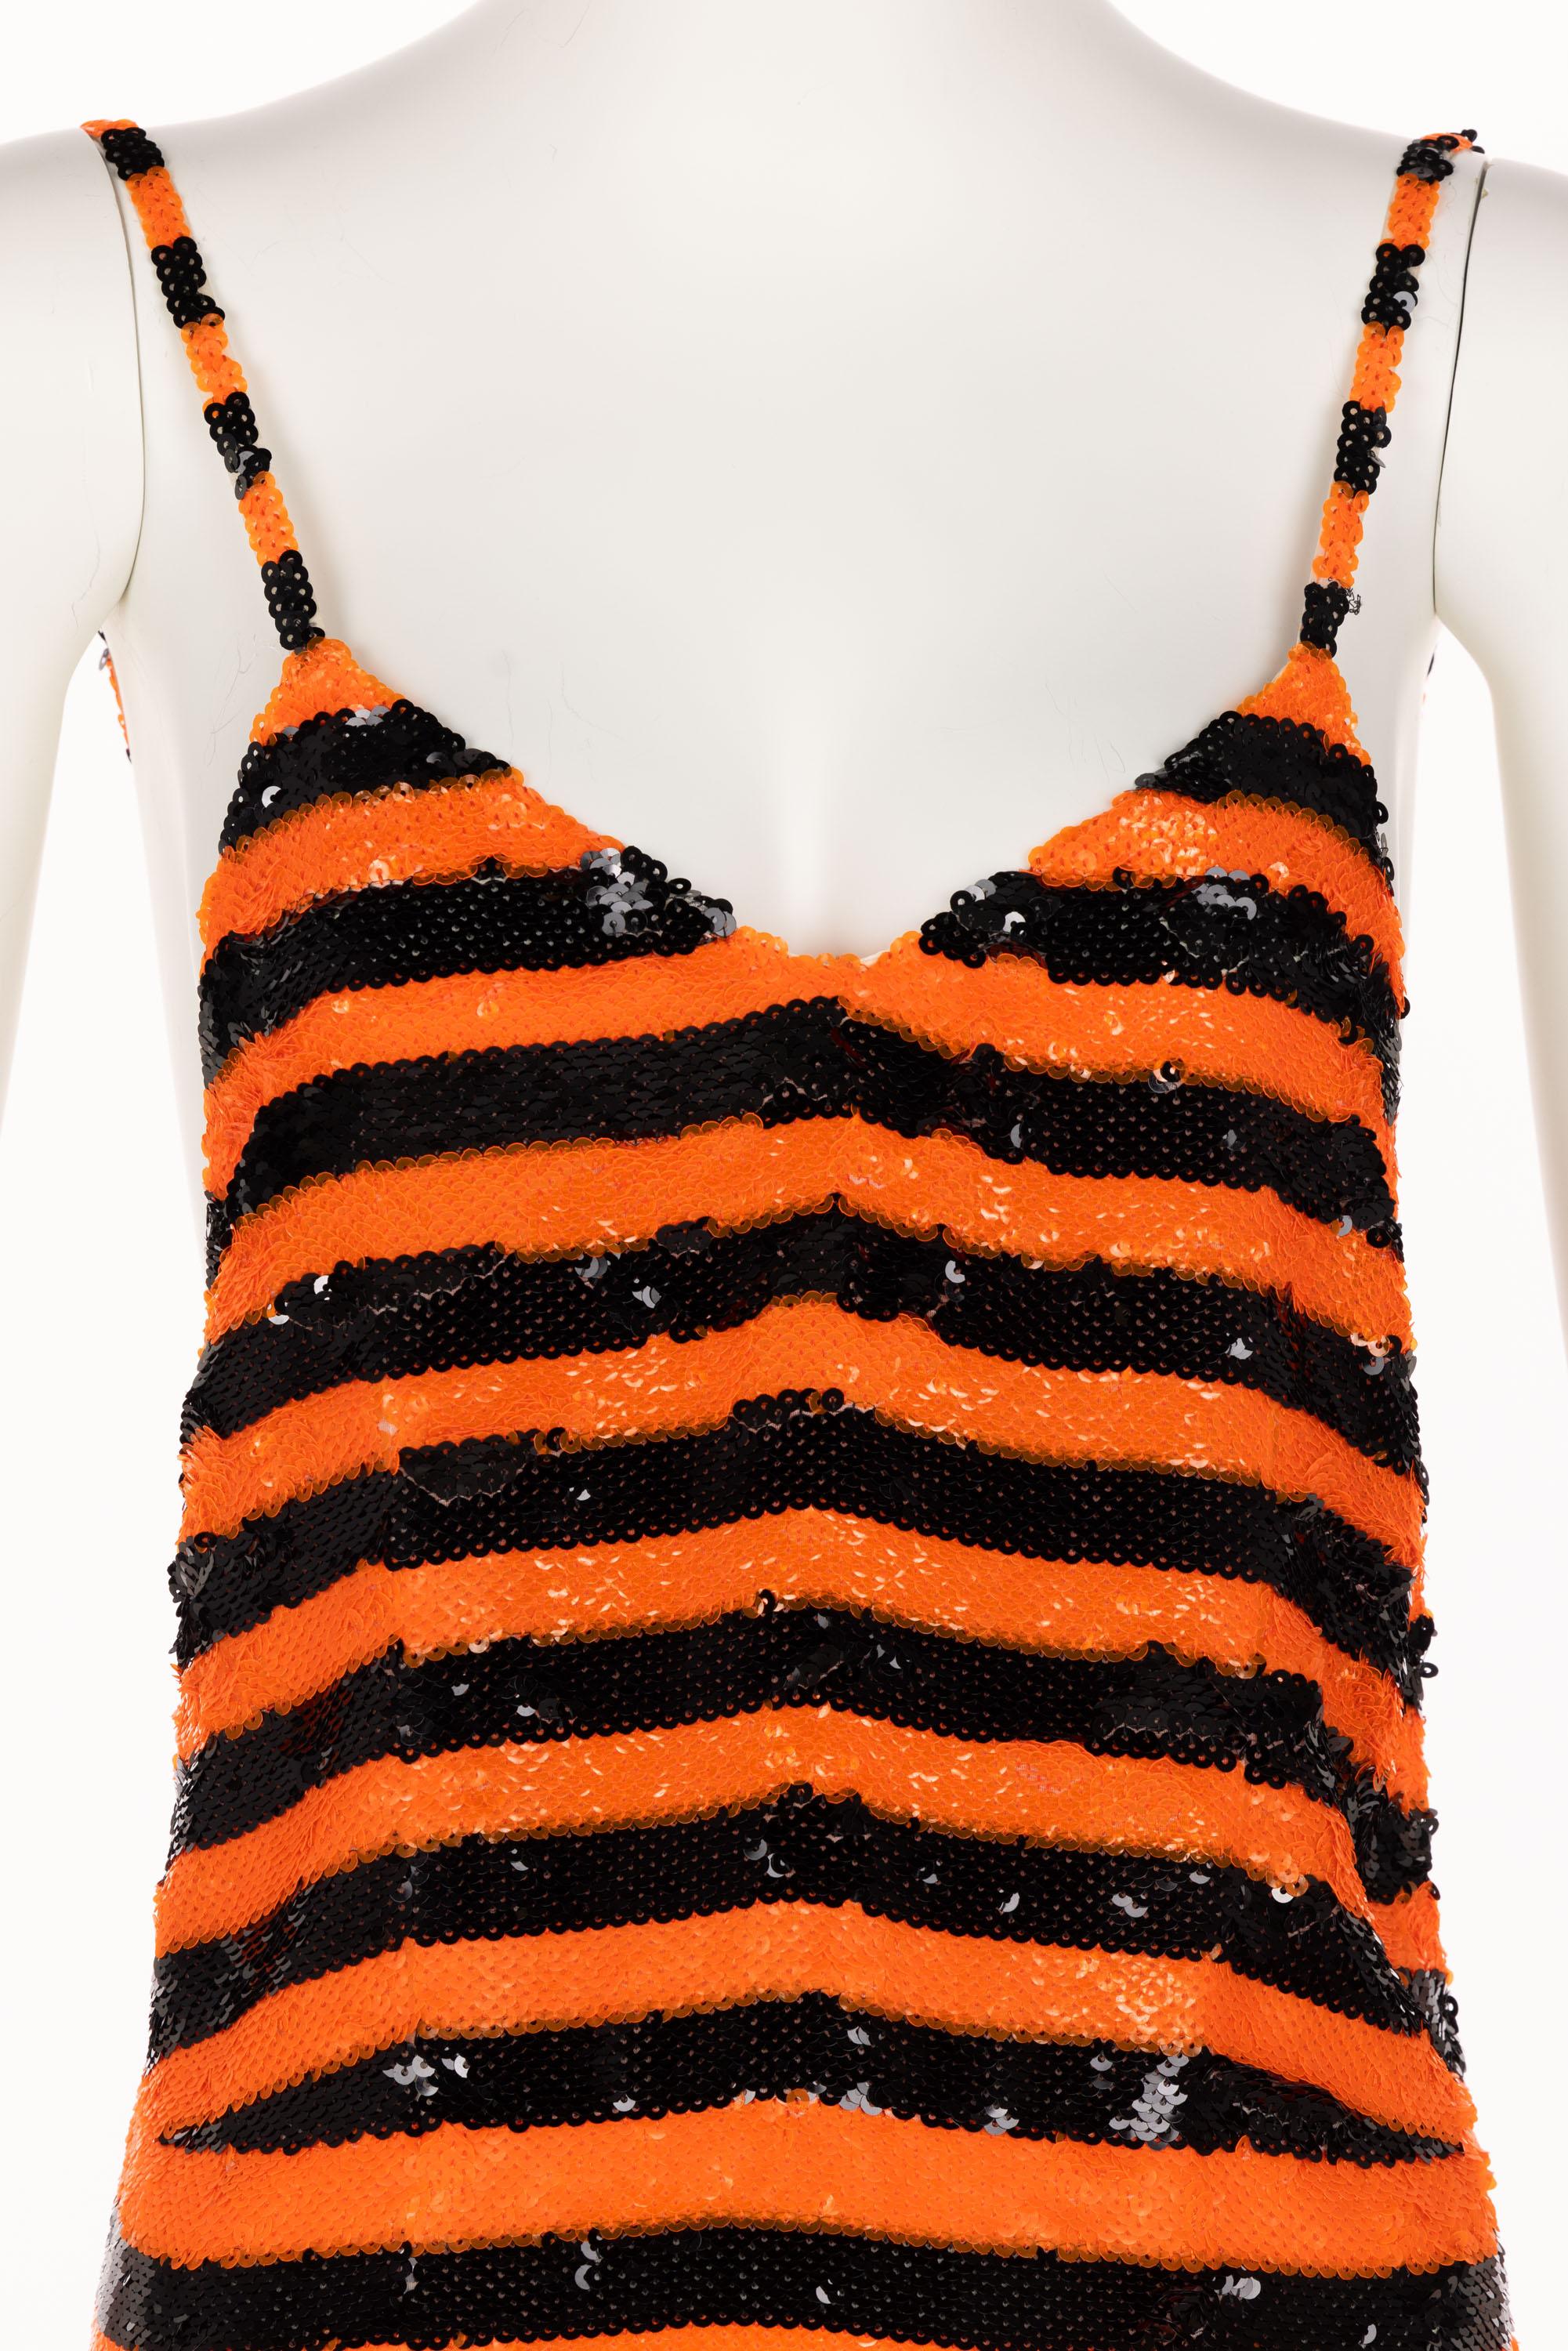 Prada Orange Black Sequin Flapper Dress S/S 2011 Beijing Limited Edition  For Sale 3